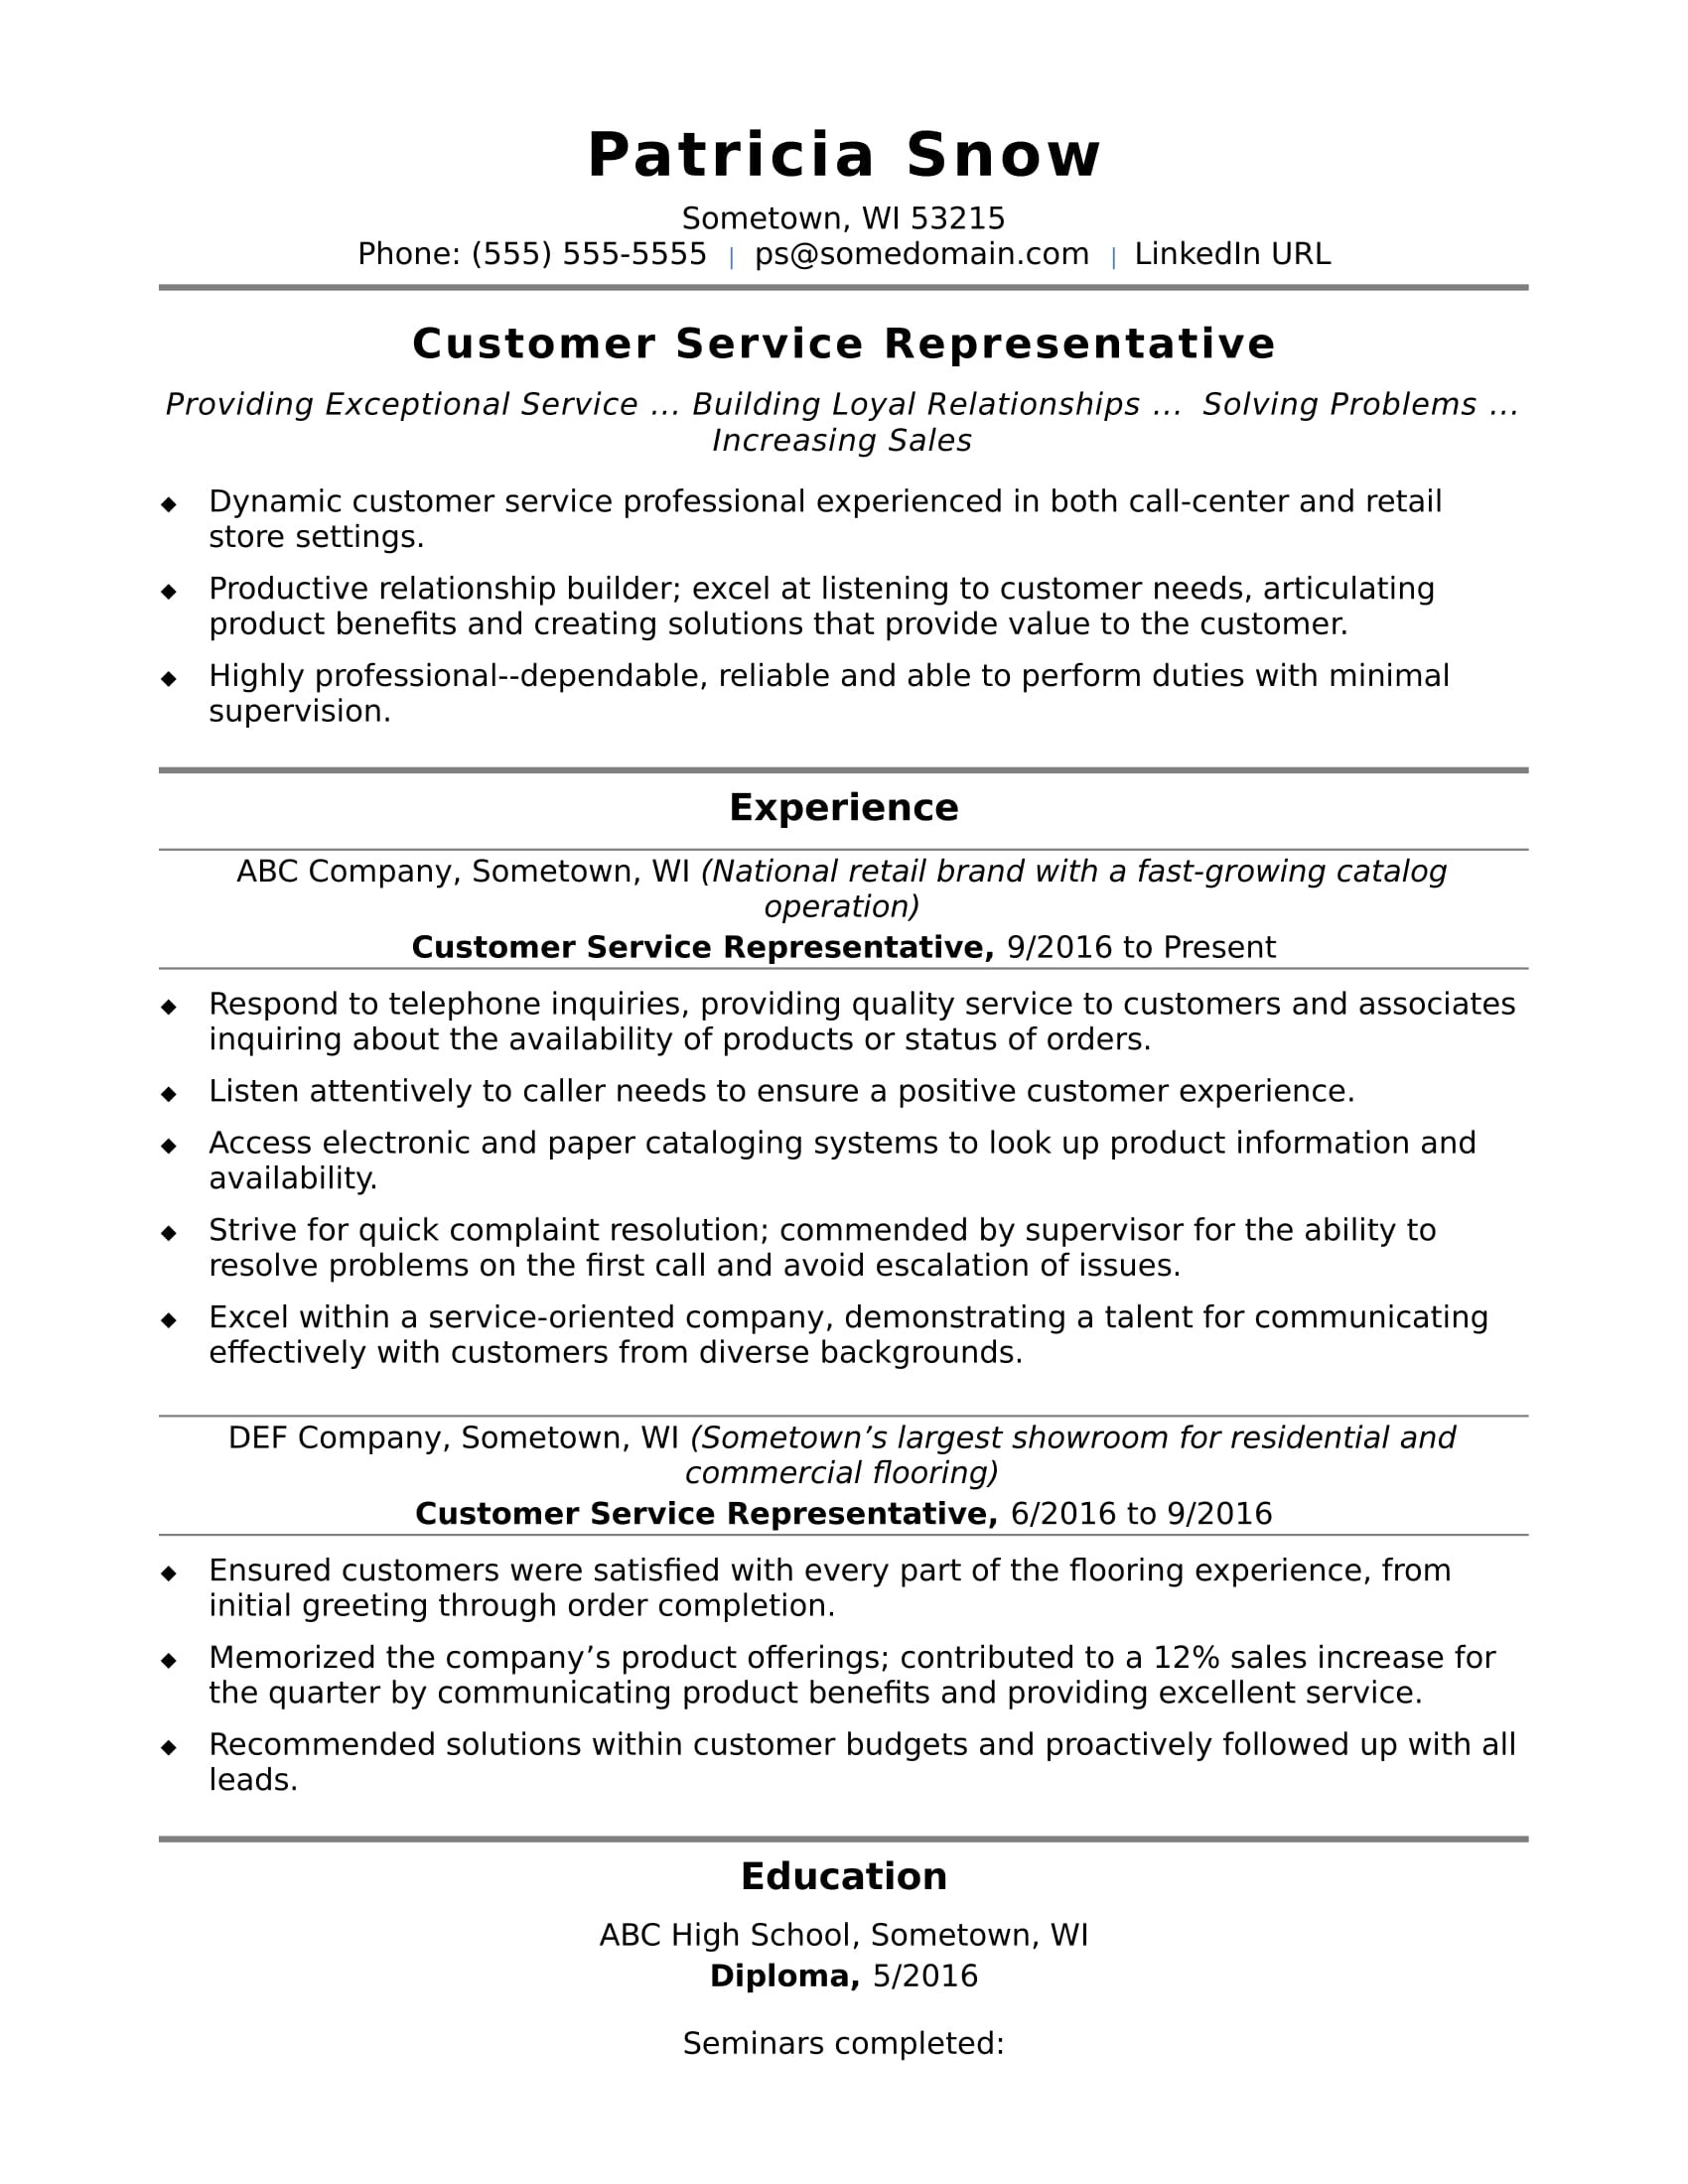 Free Sample Of Entry Level Resumes Entry-level Customer Service Resume Sample Monster.com